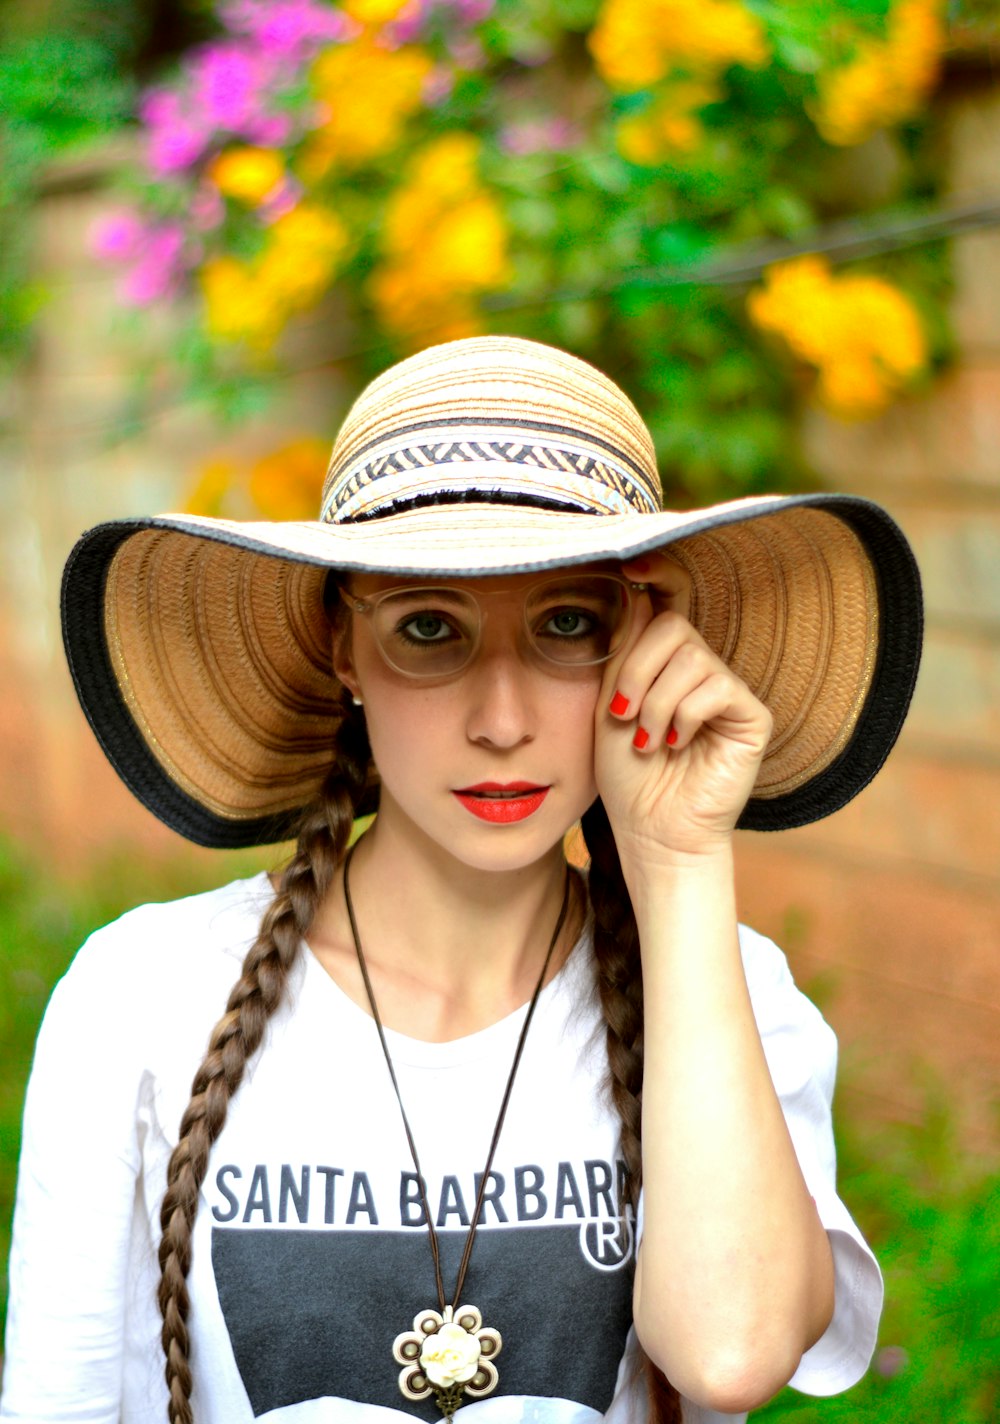 woman in white shirt wearing brown straw hat